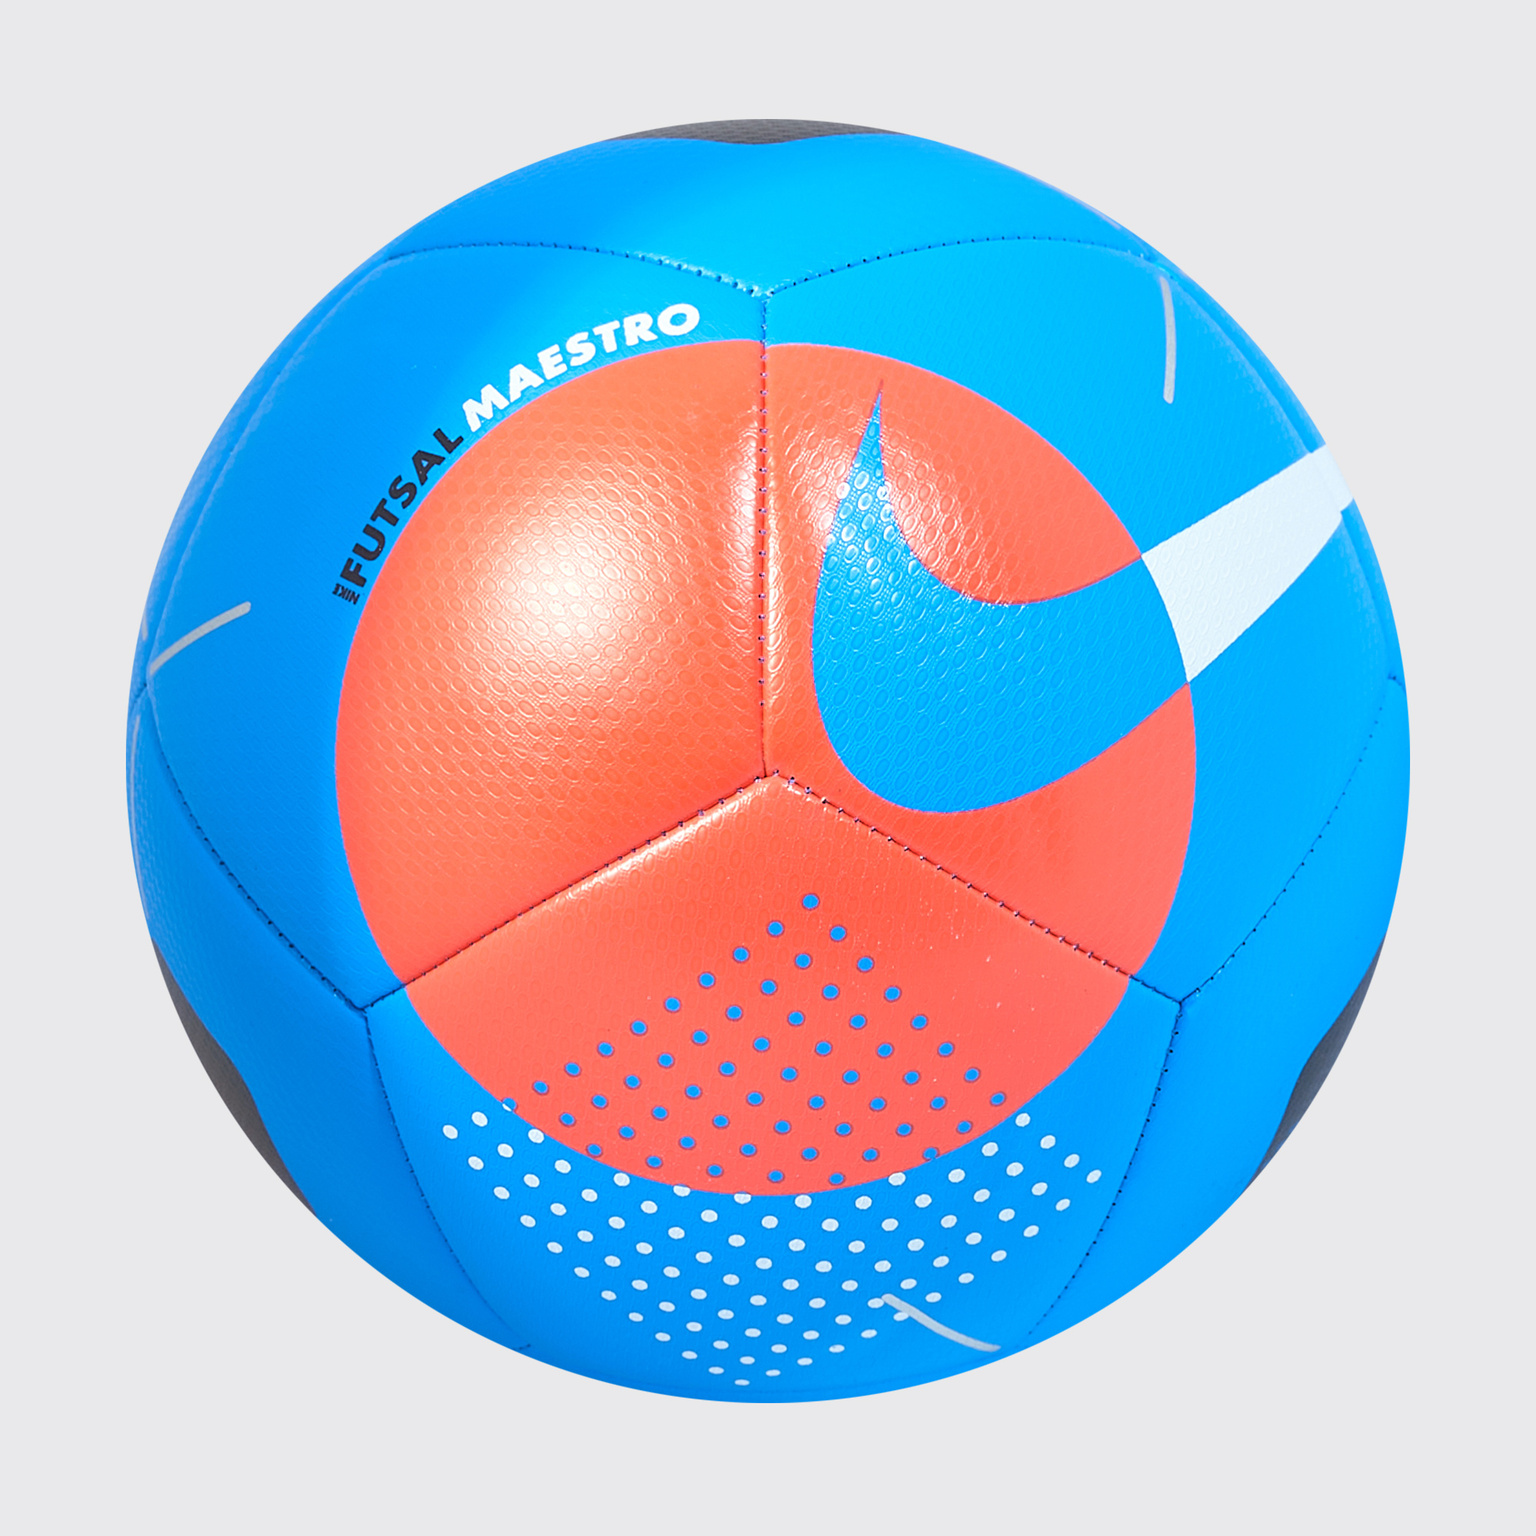 Футзальный мяч Nike Futsal Maestro SC3974-406